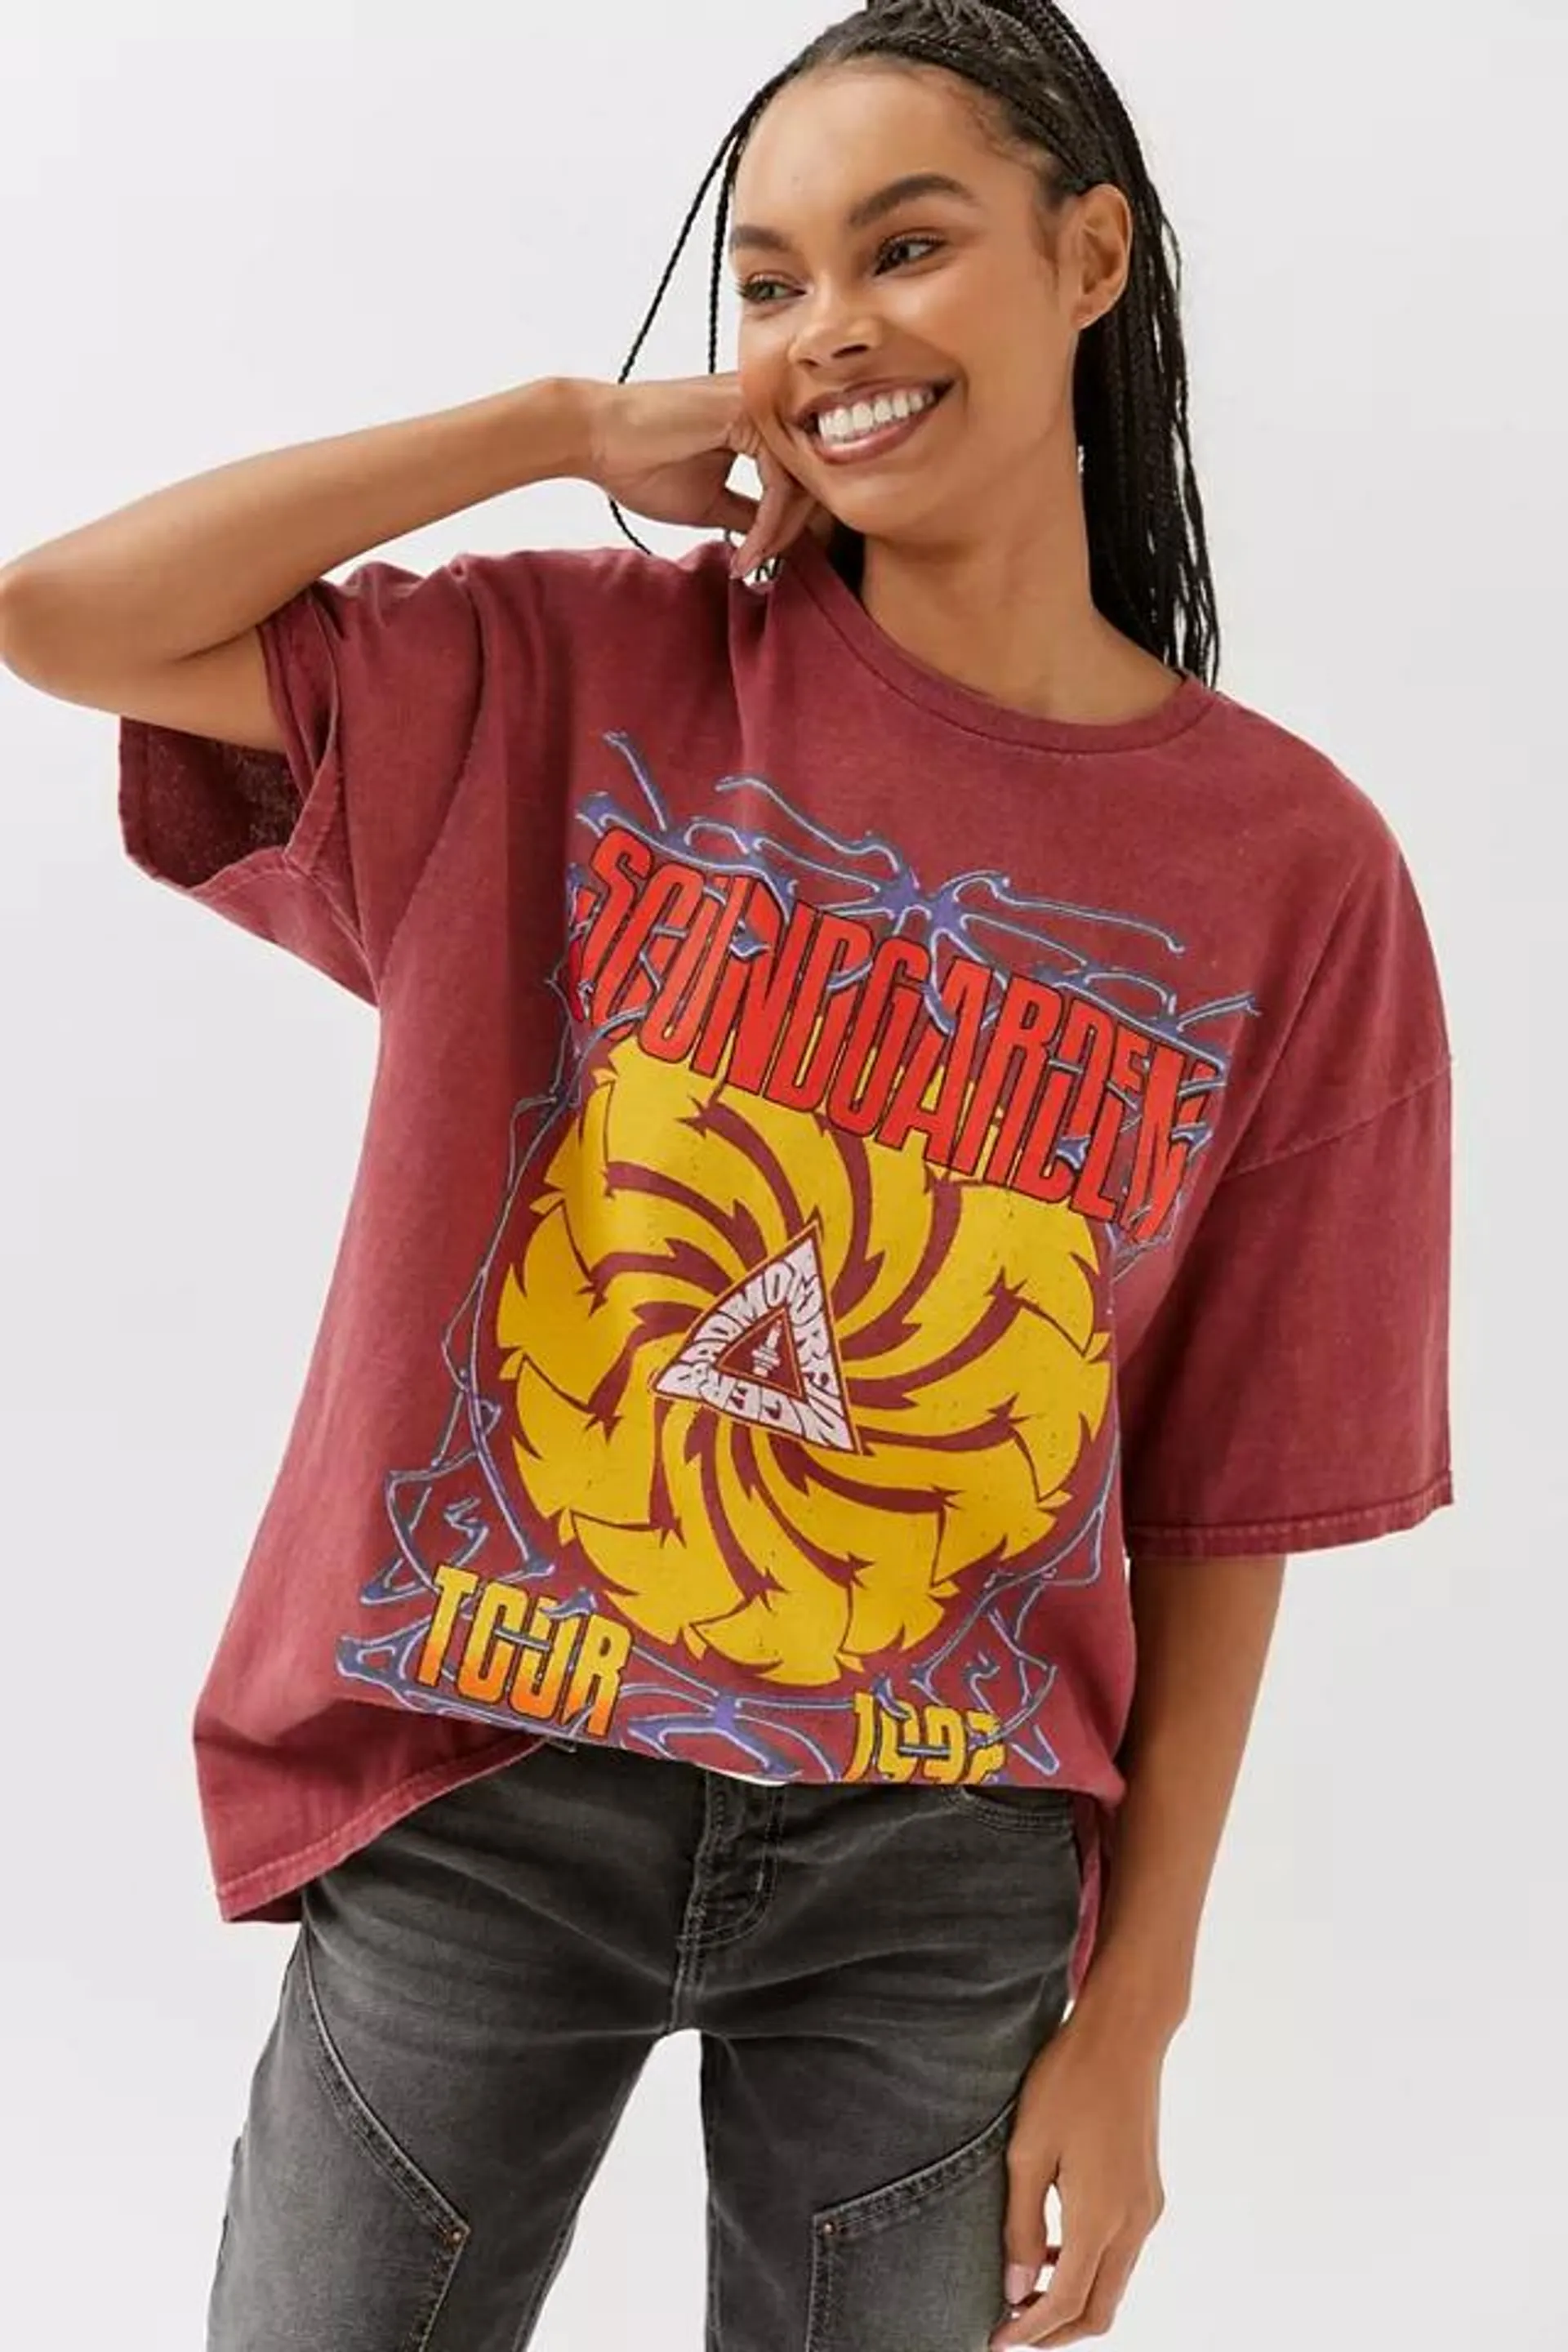 Soundgarden Tour T-Shirt Dress